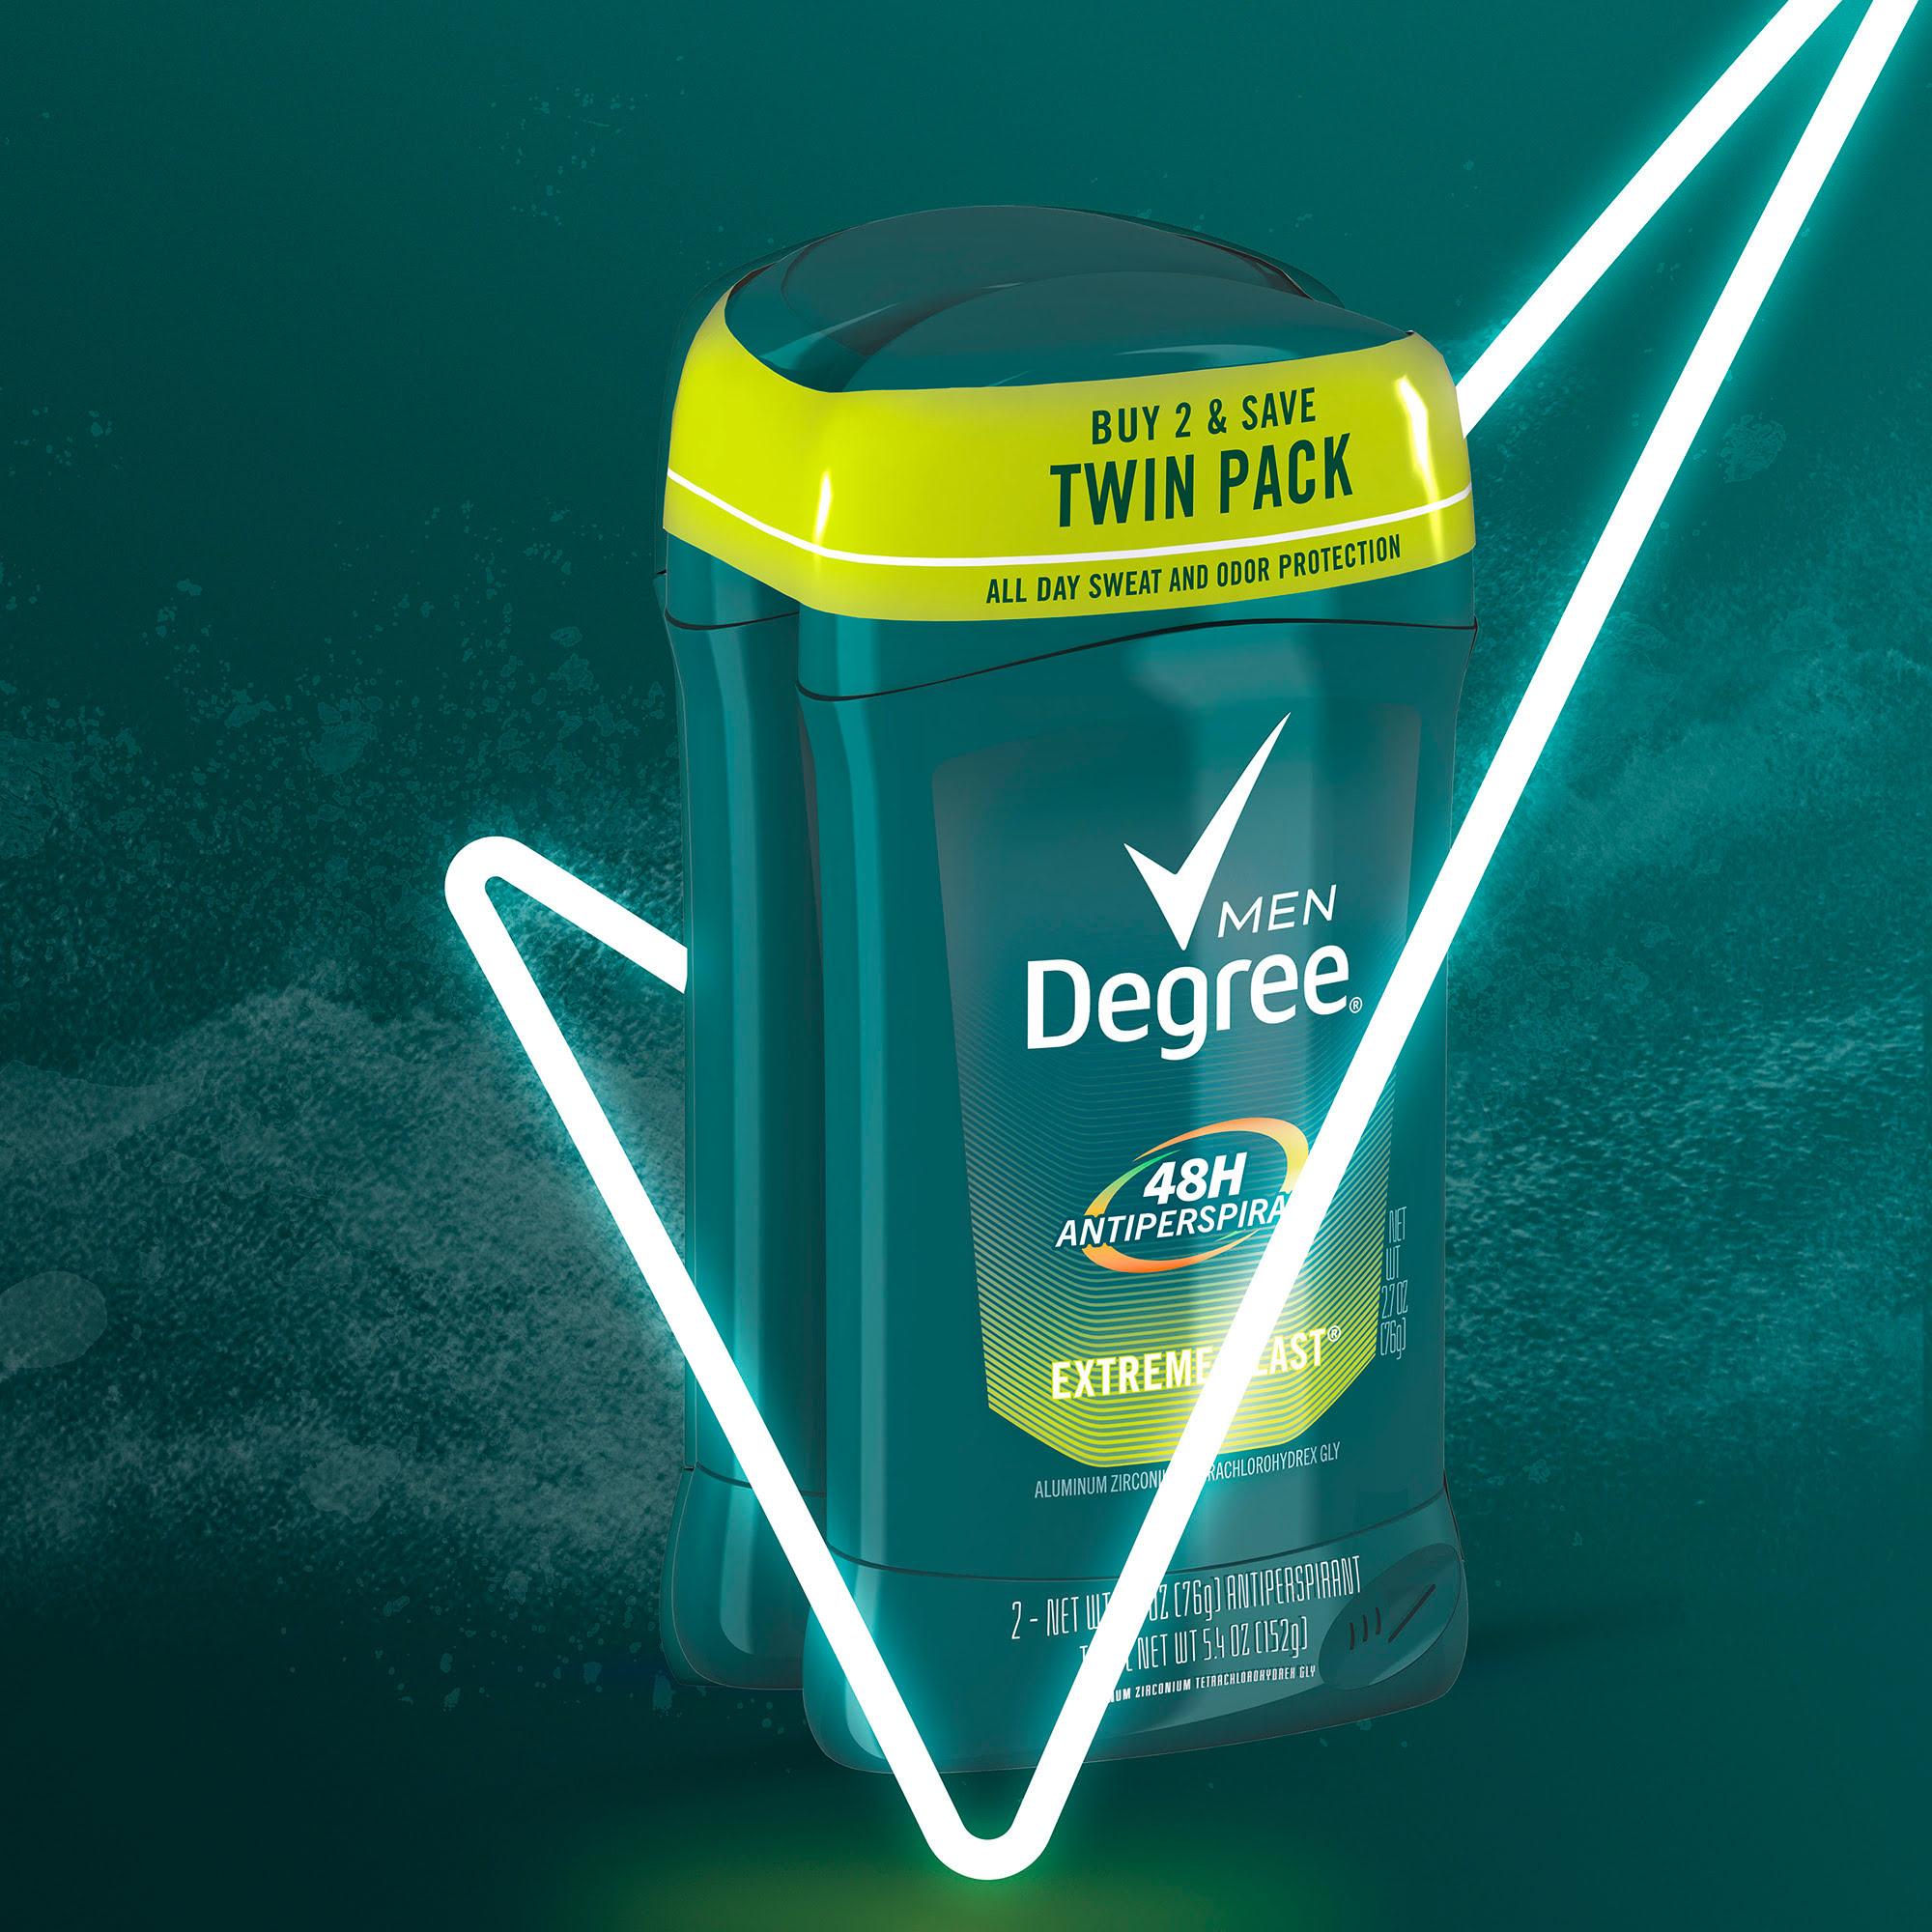 Degree Long Lasting Men's Antiperspirant Deodorant Stick Twin Pack, Mint, 2.7 oz - image 8 of 10